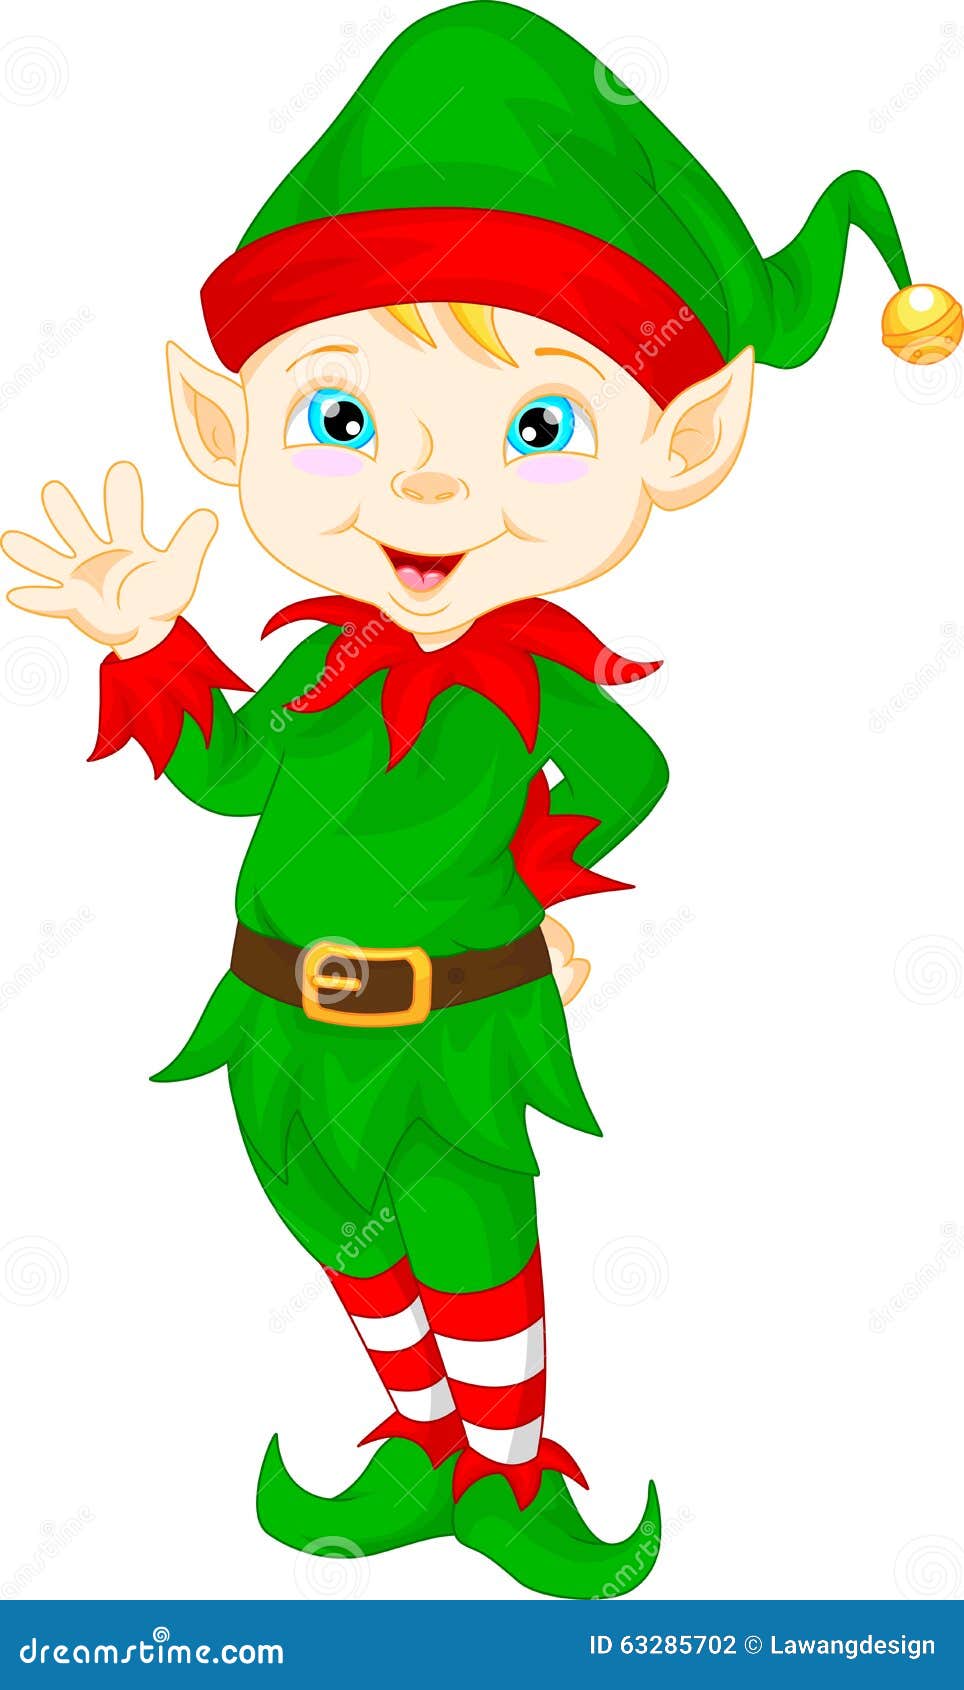 Cute cartoon elf waving stock vector. Illustration of mascot - 63285702